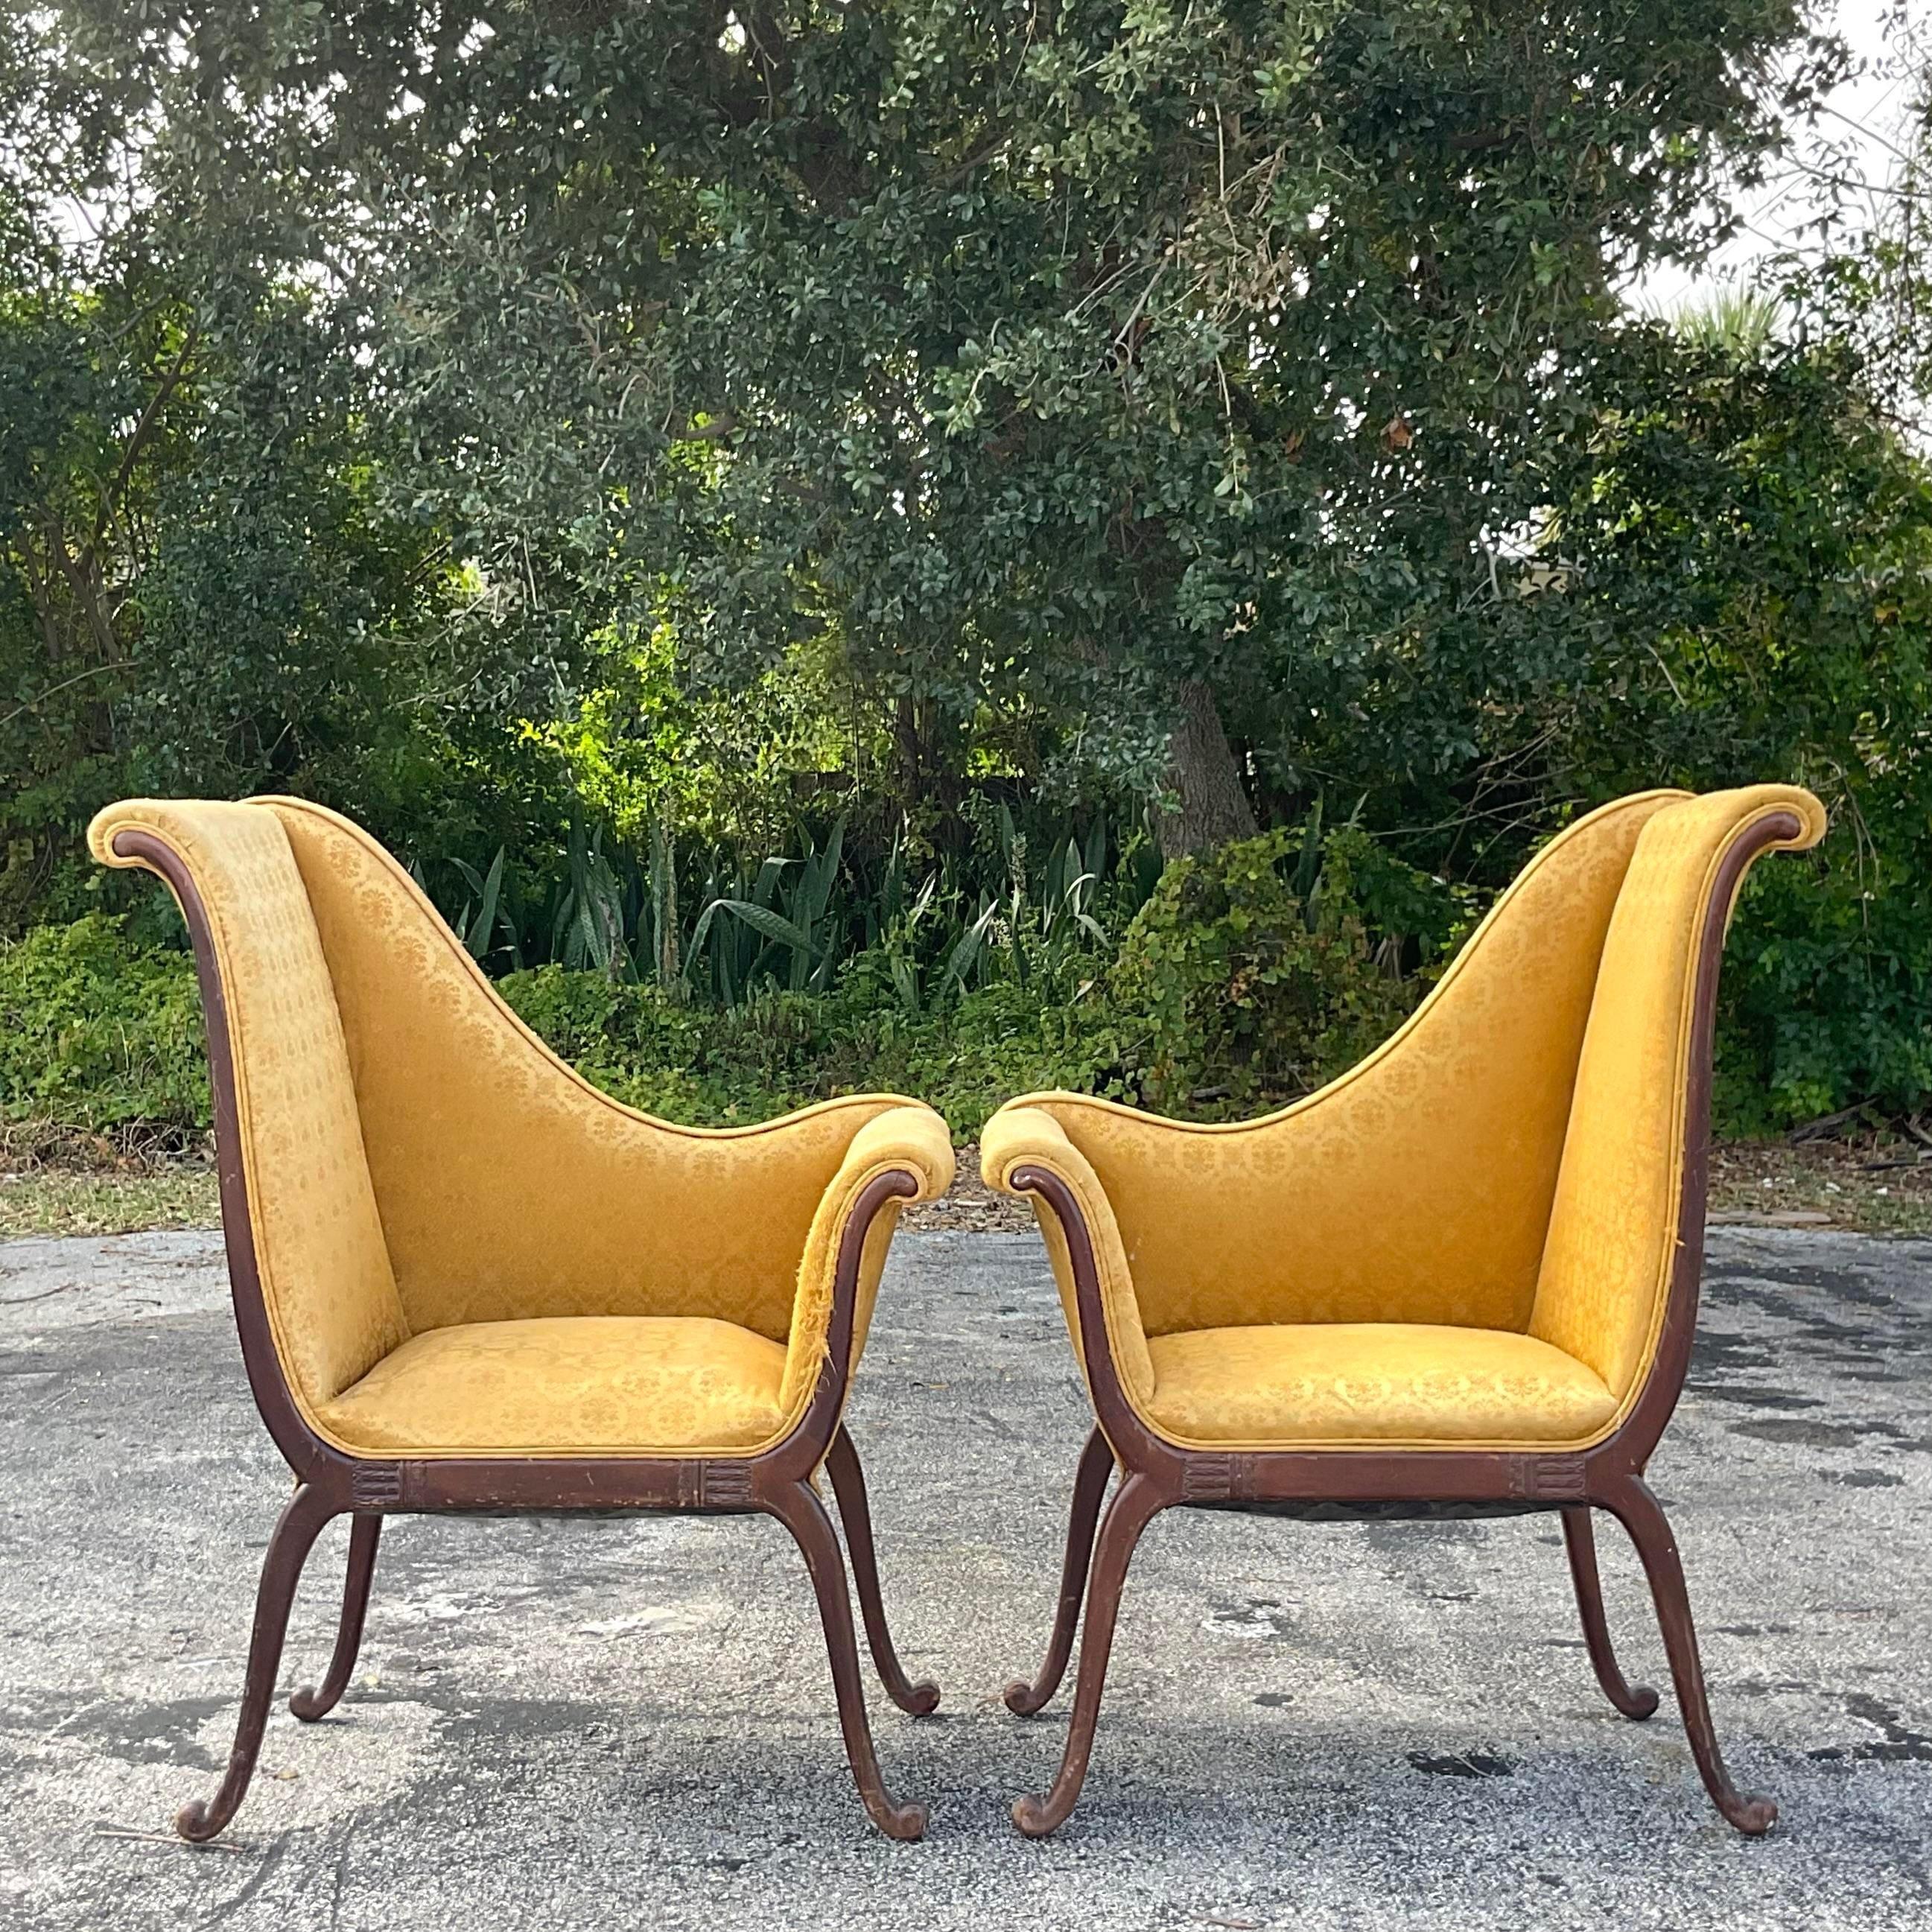 American Vintage Regency Parker Deux Chairs - a Pair For Sale